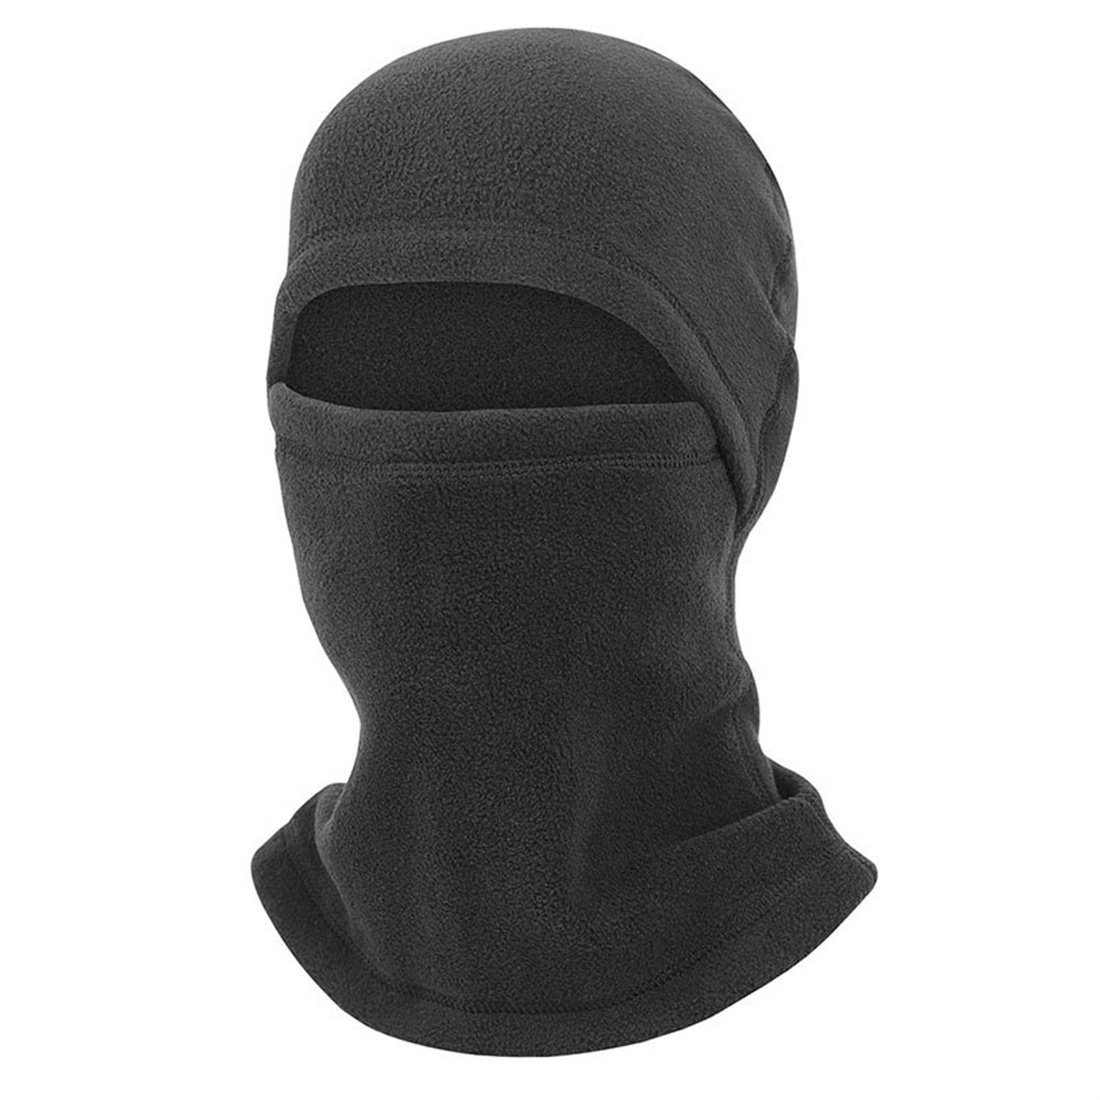 DÖRÖY Sturmhaube Winter Reiten Warme Maske,Multifunktionale Coldproof Ski Kopfbedeckung Schwarz